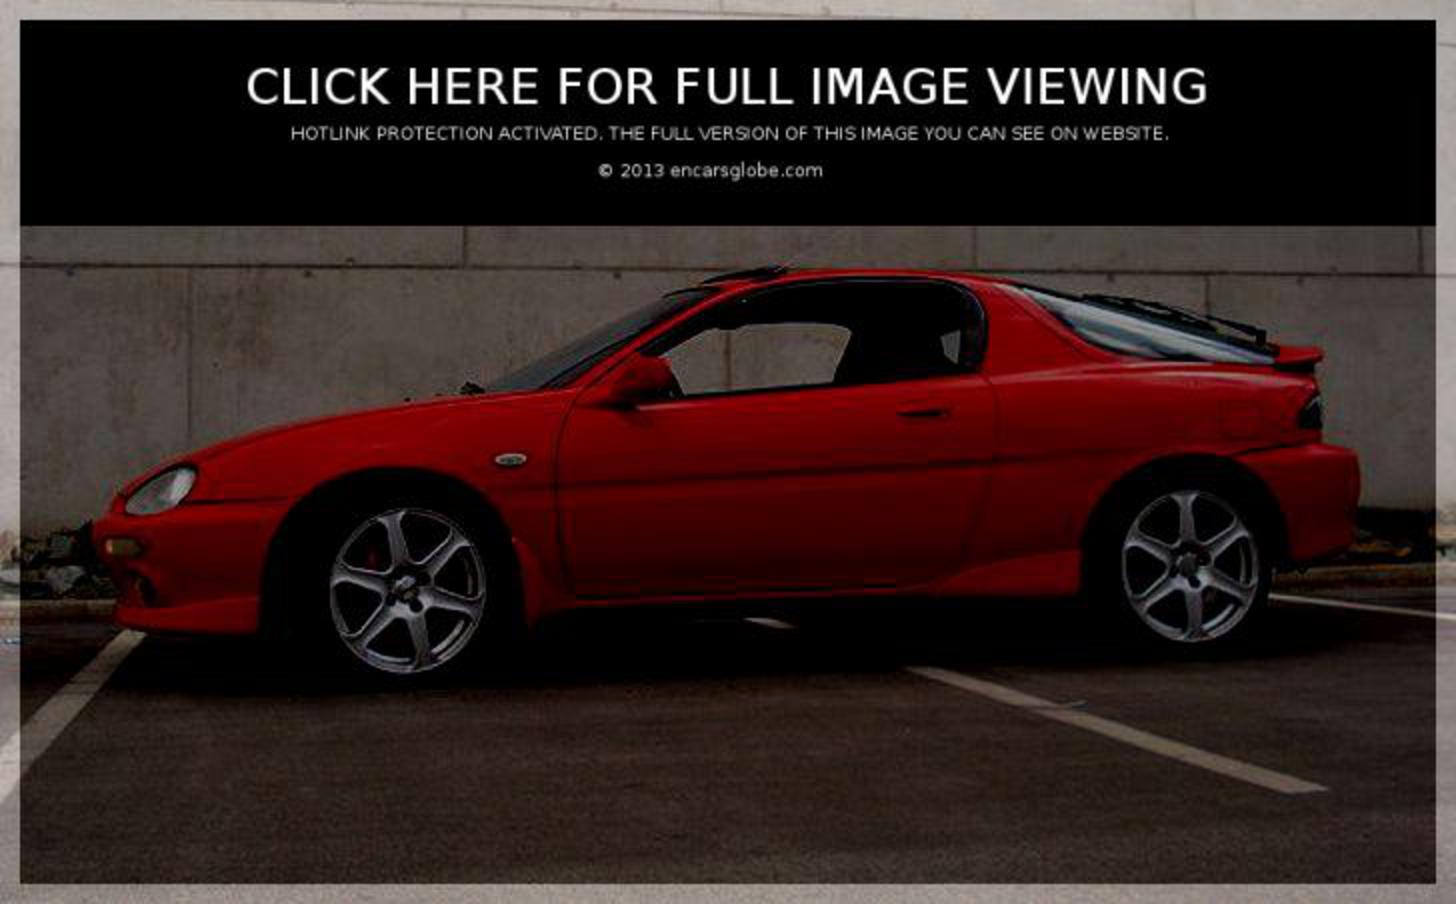 Mazda Presso V6 (04 image) Size: 728 x 452 px | image/jpeg | 30681 views